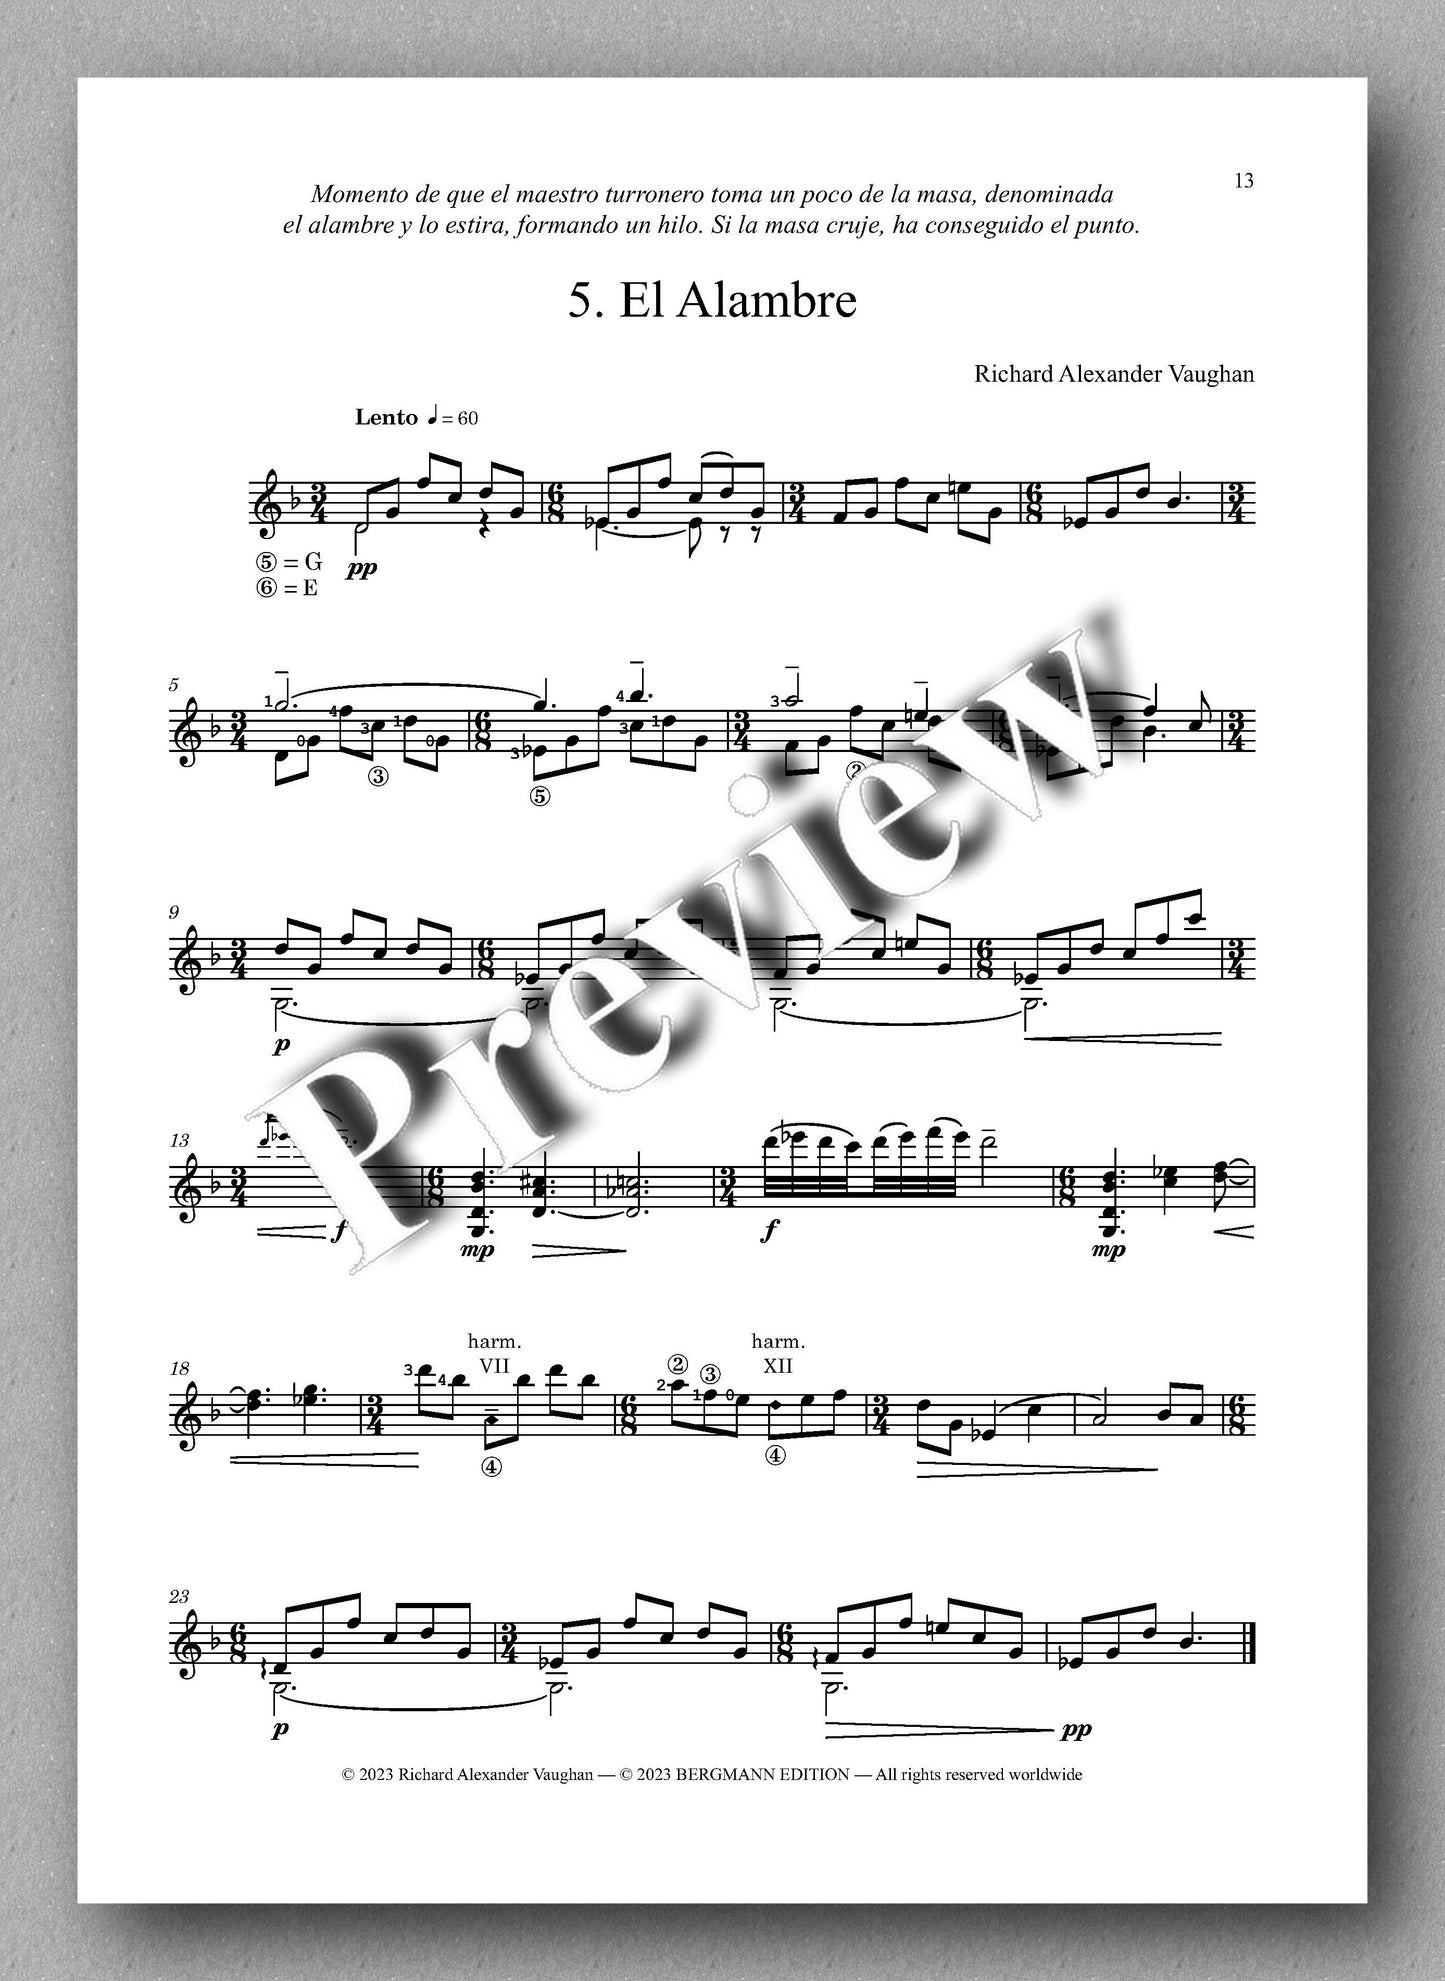 Richard Alexander Vaughan, Xixona Turrón - preview of the music score 4